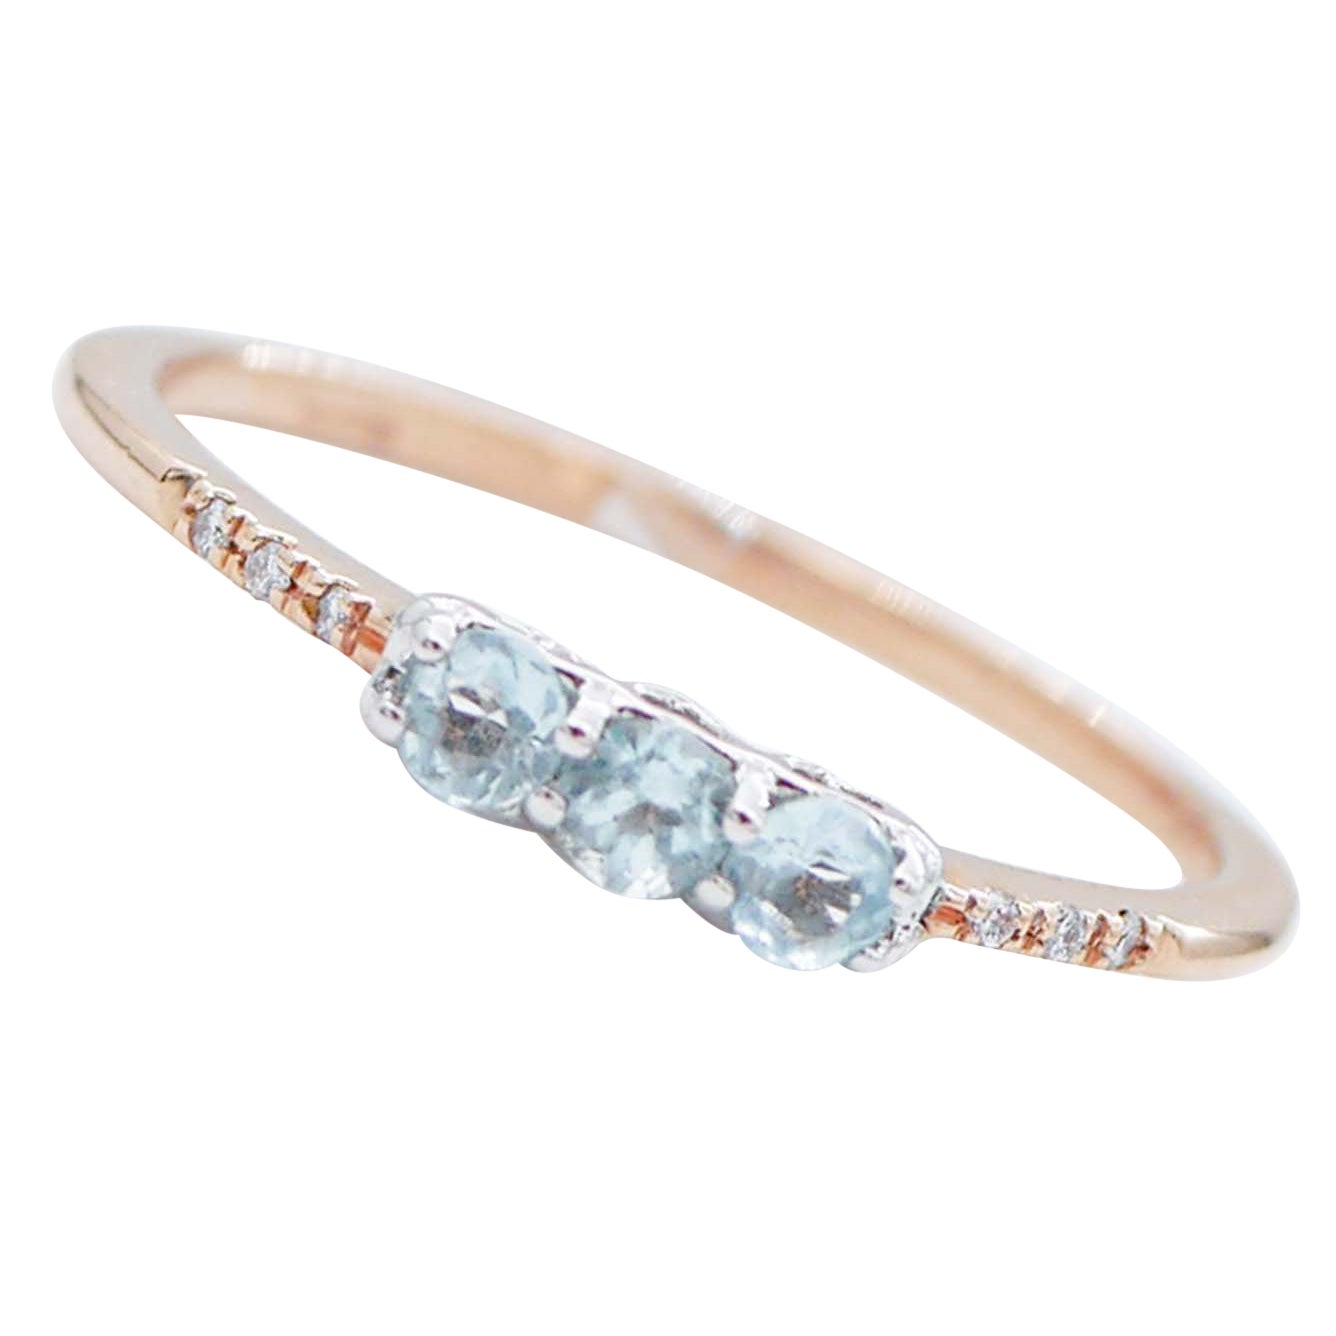 Aquamarine, Diamonds, 18 Karat Rose and White Gokd Modern Ring